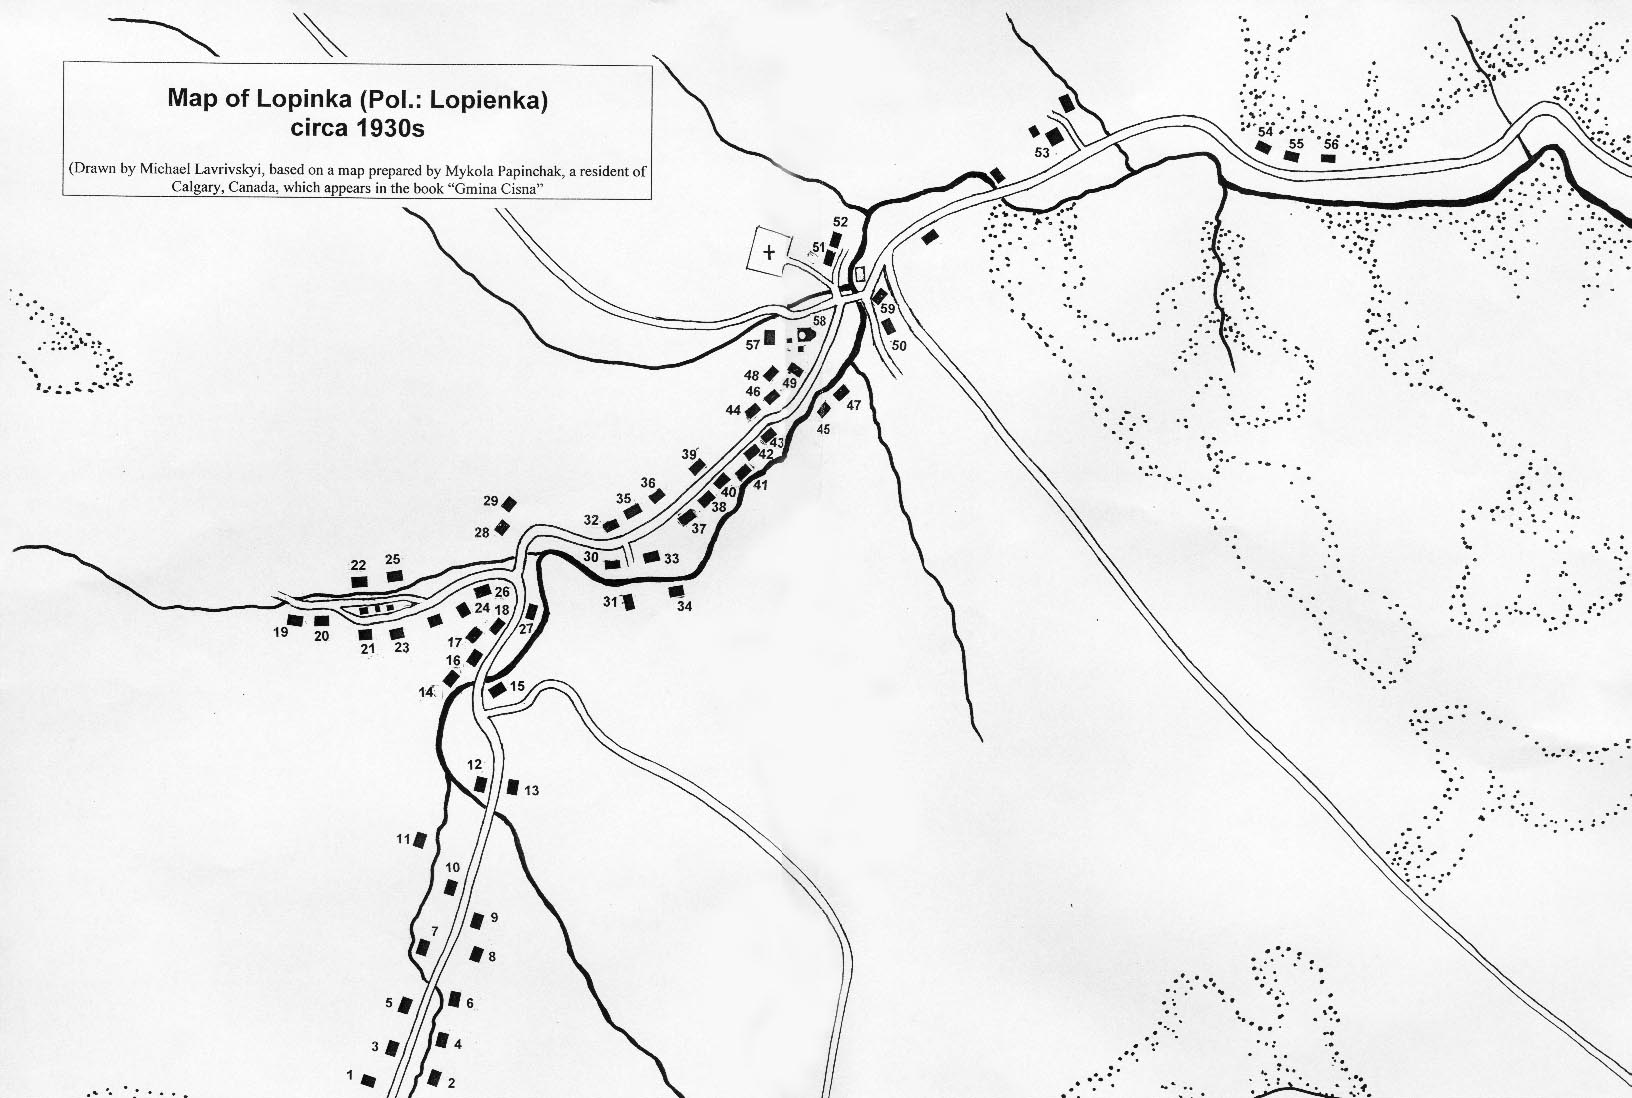 Lopienka Map